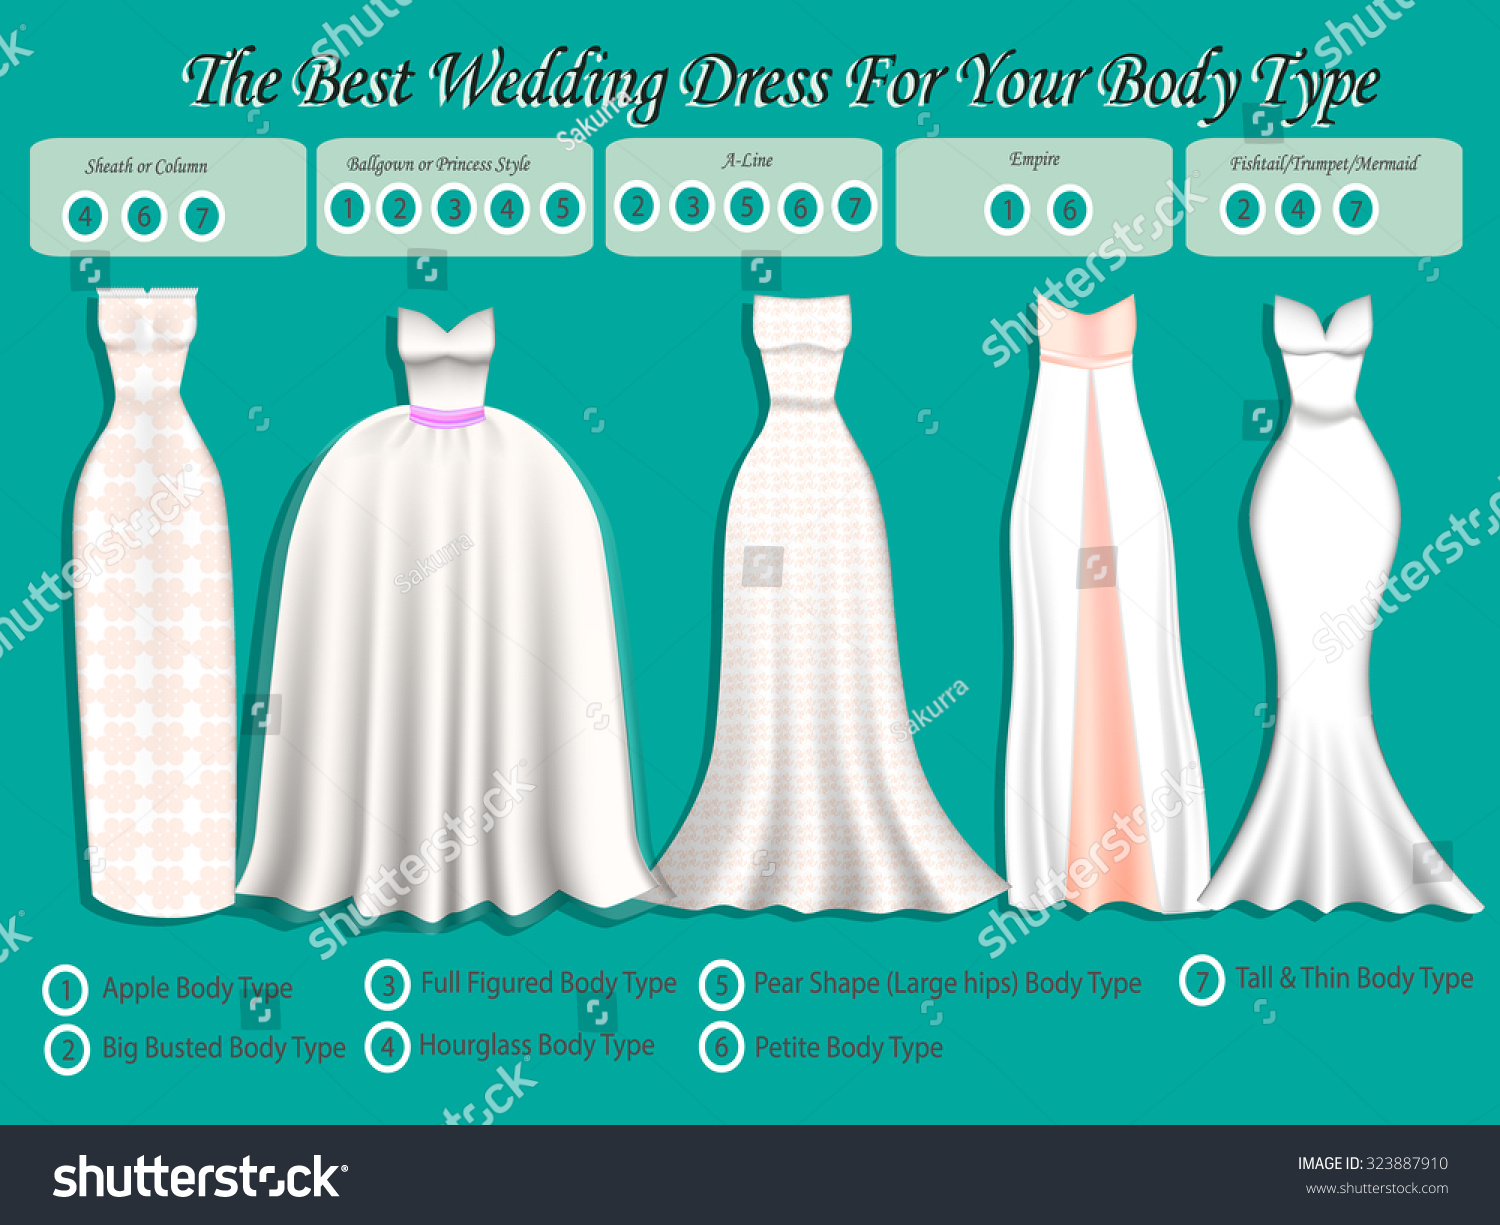 Wedding Dress For Body Type. Wedding Dress Infographic 